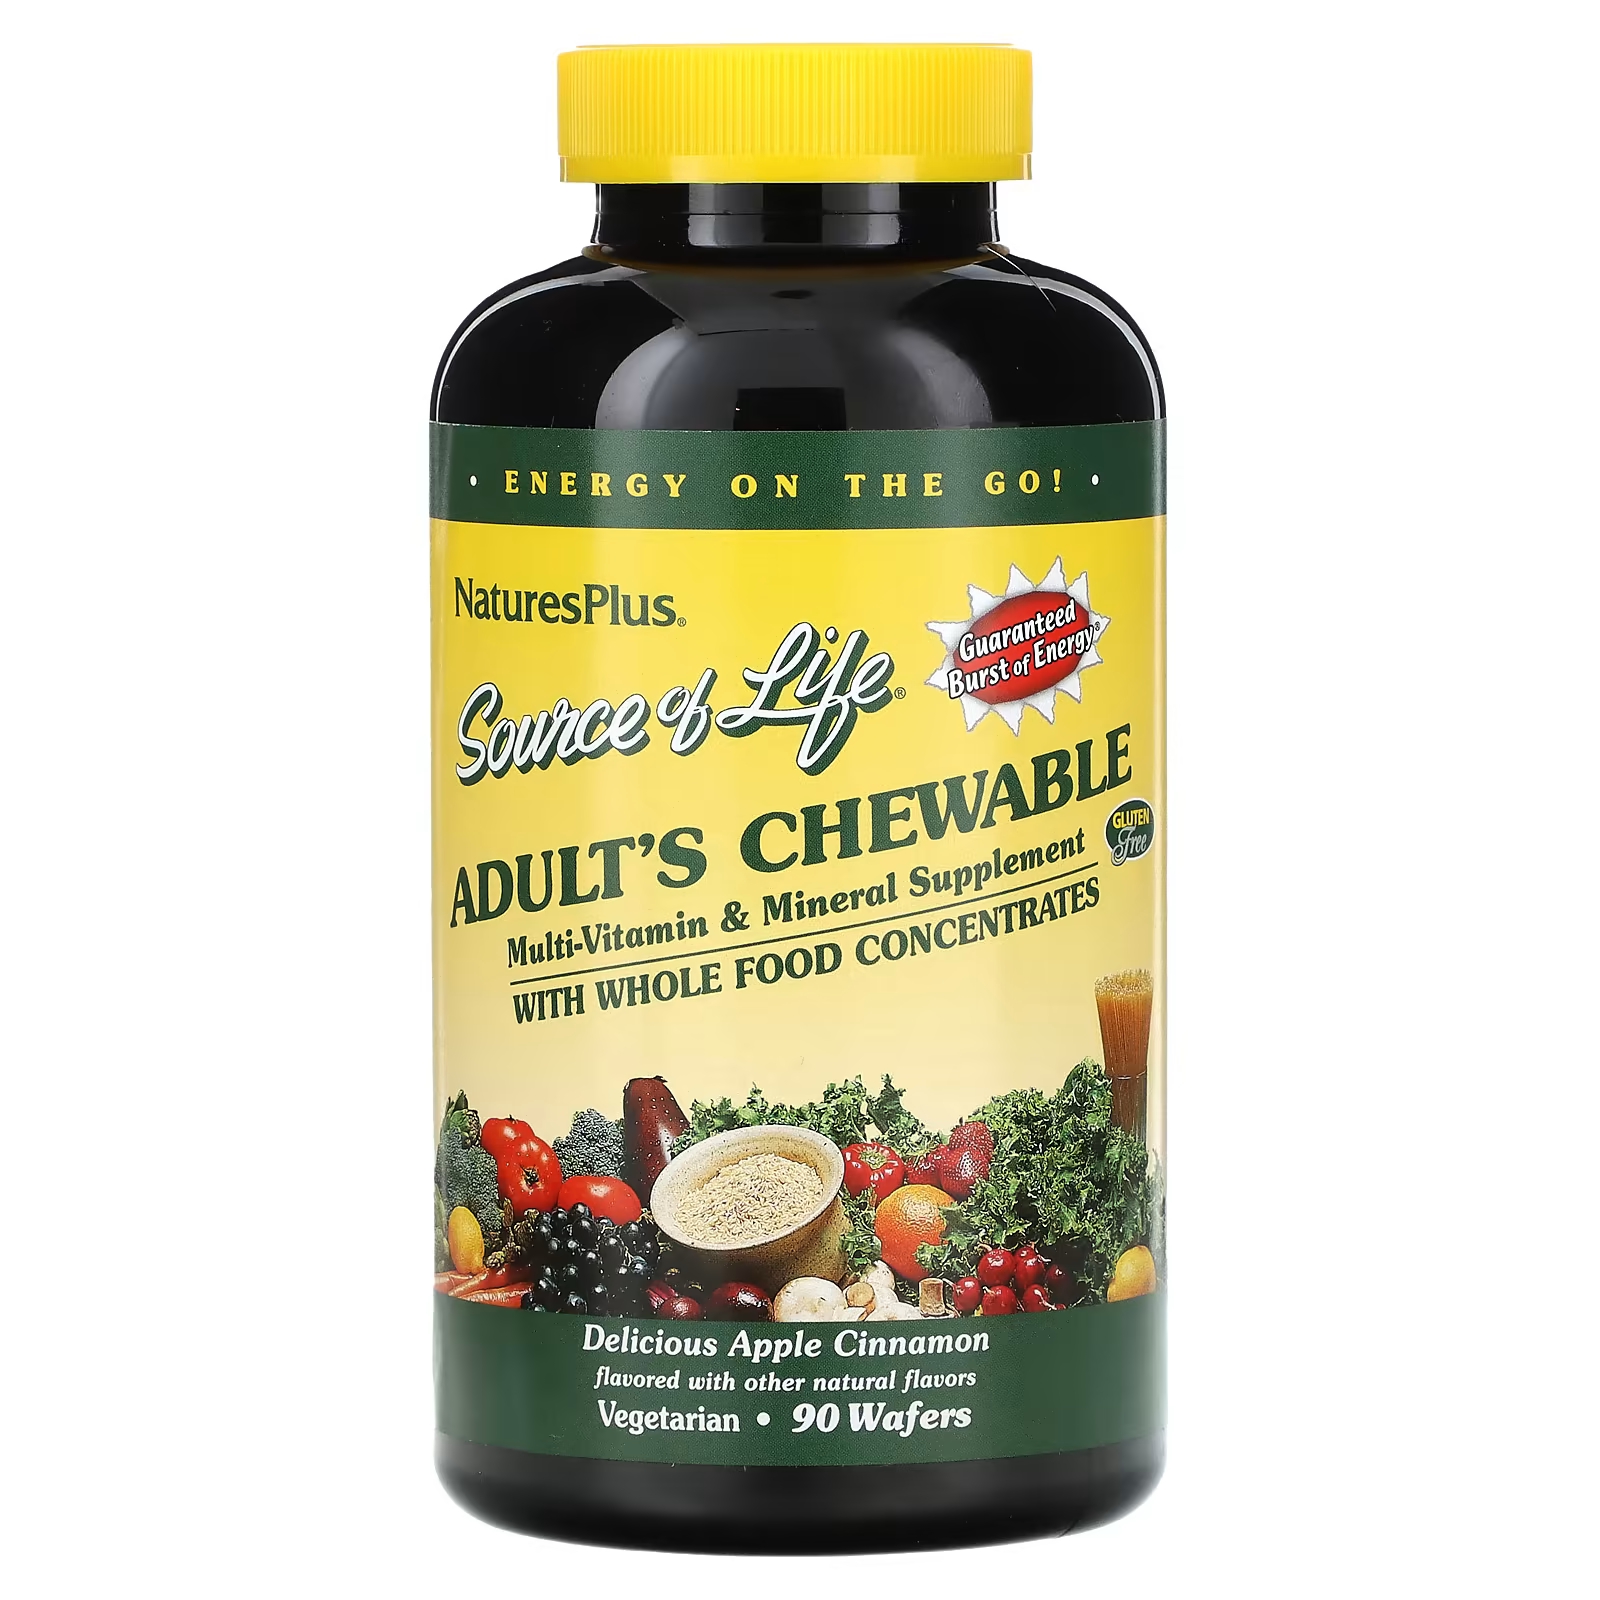 Мультивитамины NaturesPlus для взрослых со вкусом яблока с корицей, 90 таблеток yumv s мультивитамины для взрослых со вкусом малины 60 желейных витаминов